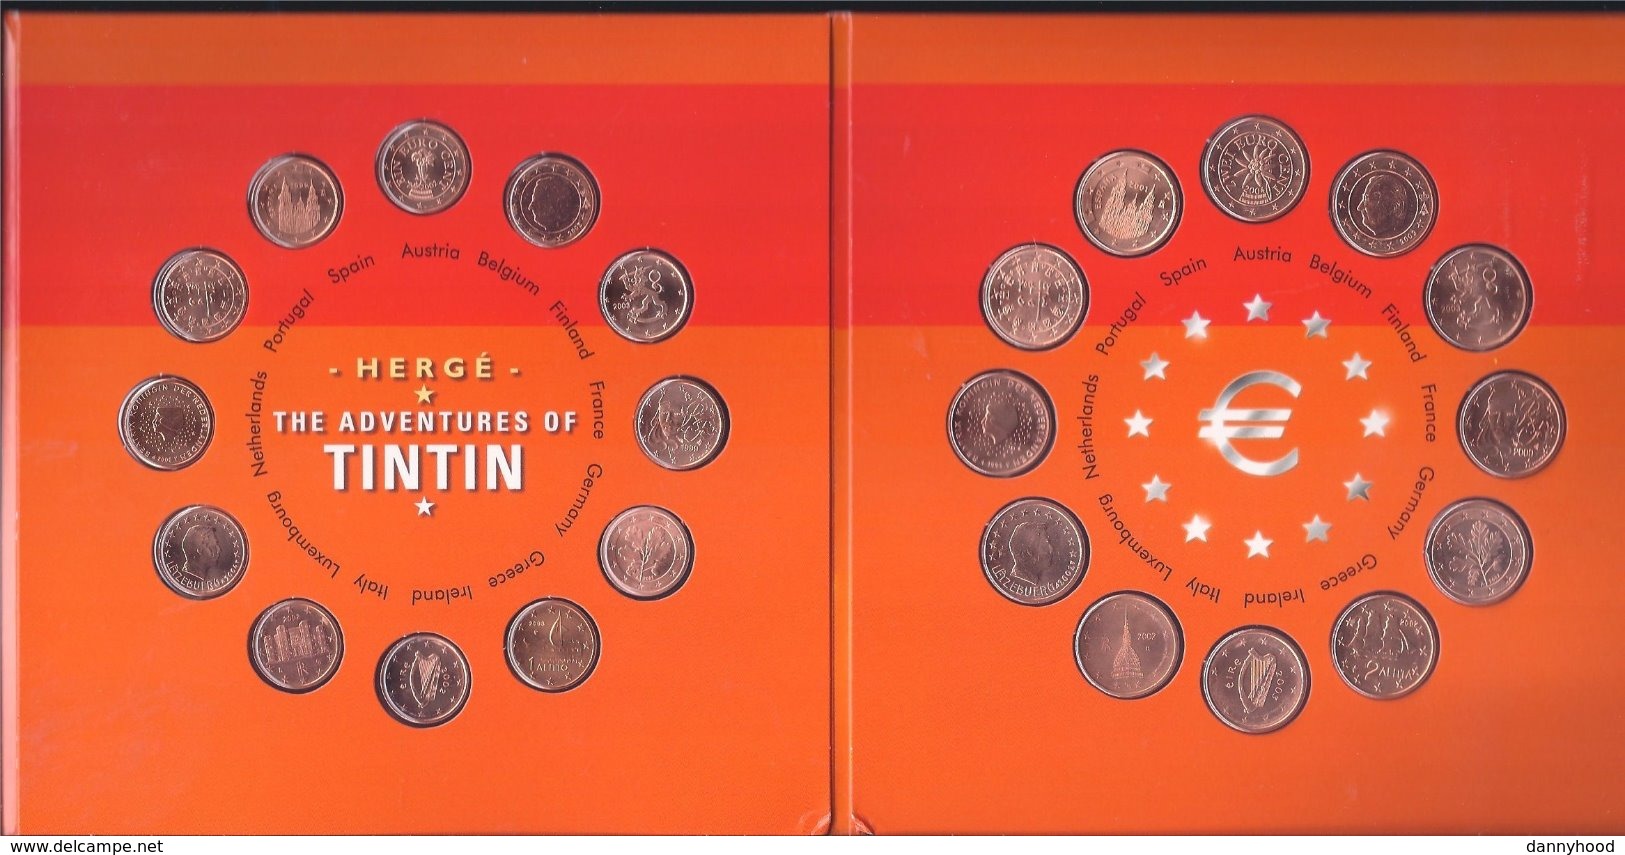 België/Belgique 2004 Hergé Tintin 50th Anniversary Coin Set Explorers on the Moon 1954-2004